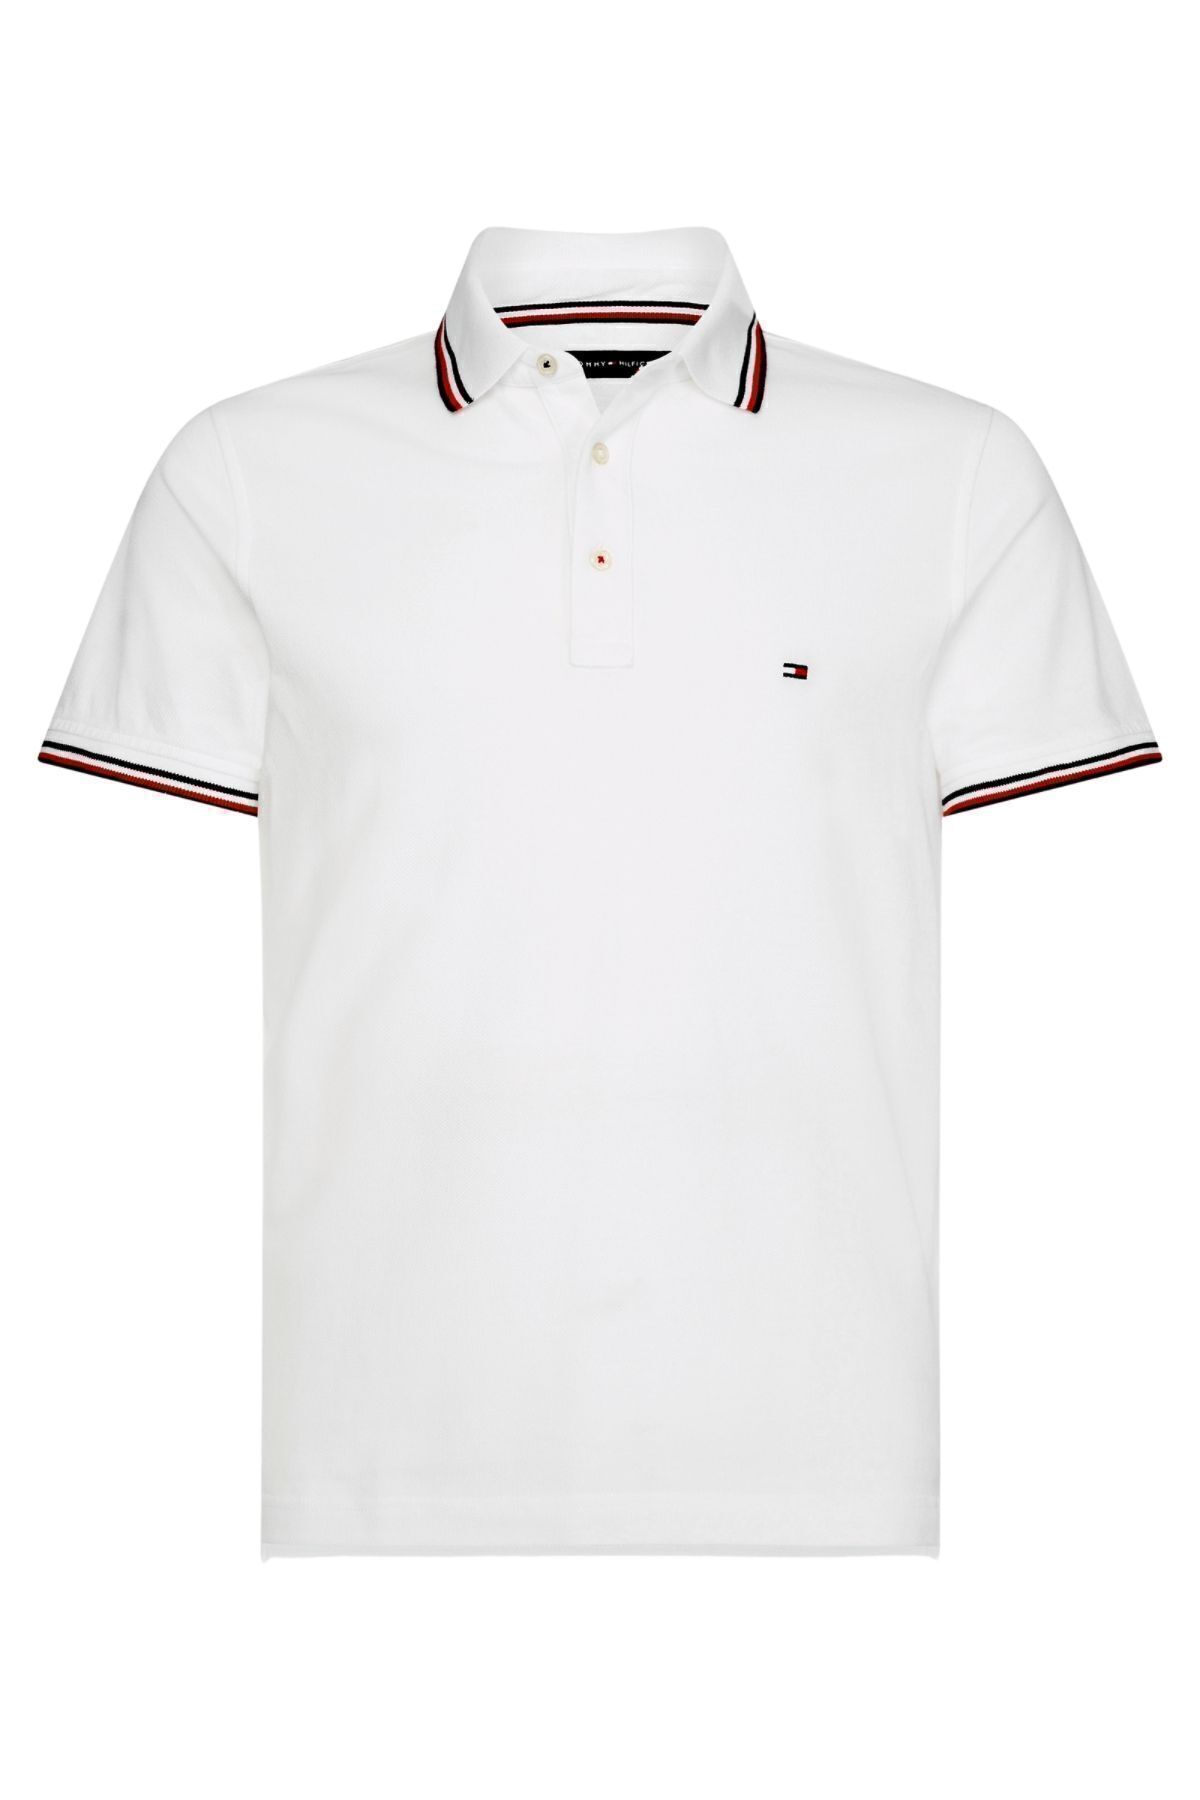 Tommy Hilfiger Erkek Beyaz T-shirt Mw0mw13080ybr-beyaz